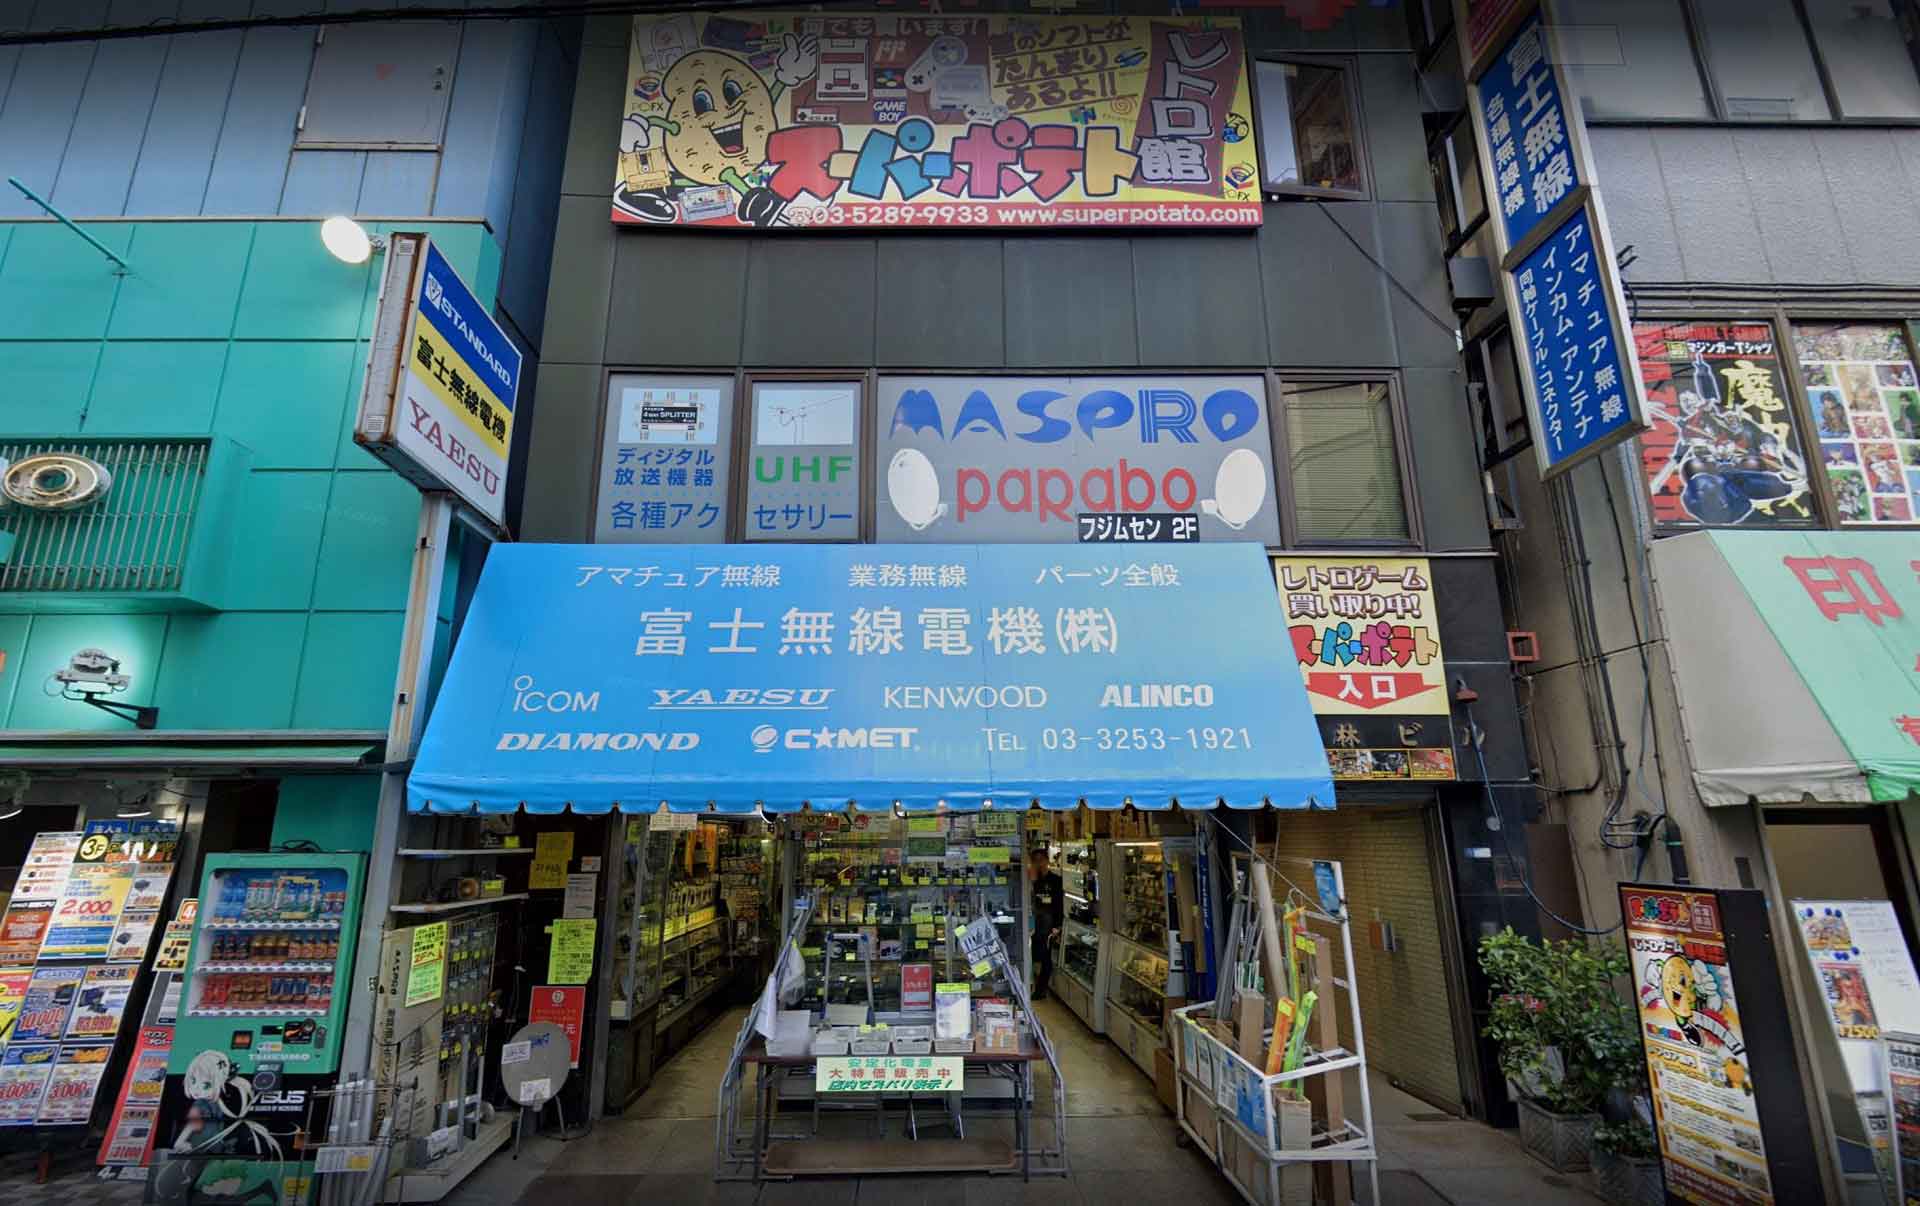 Super Potato: Japans legendärer Games Store eröffnet internationalen Ebay-Shop